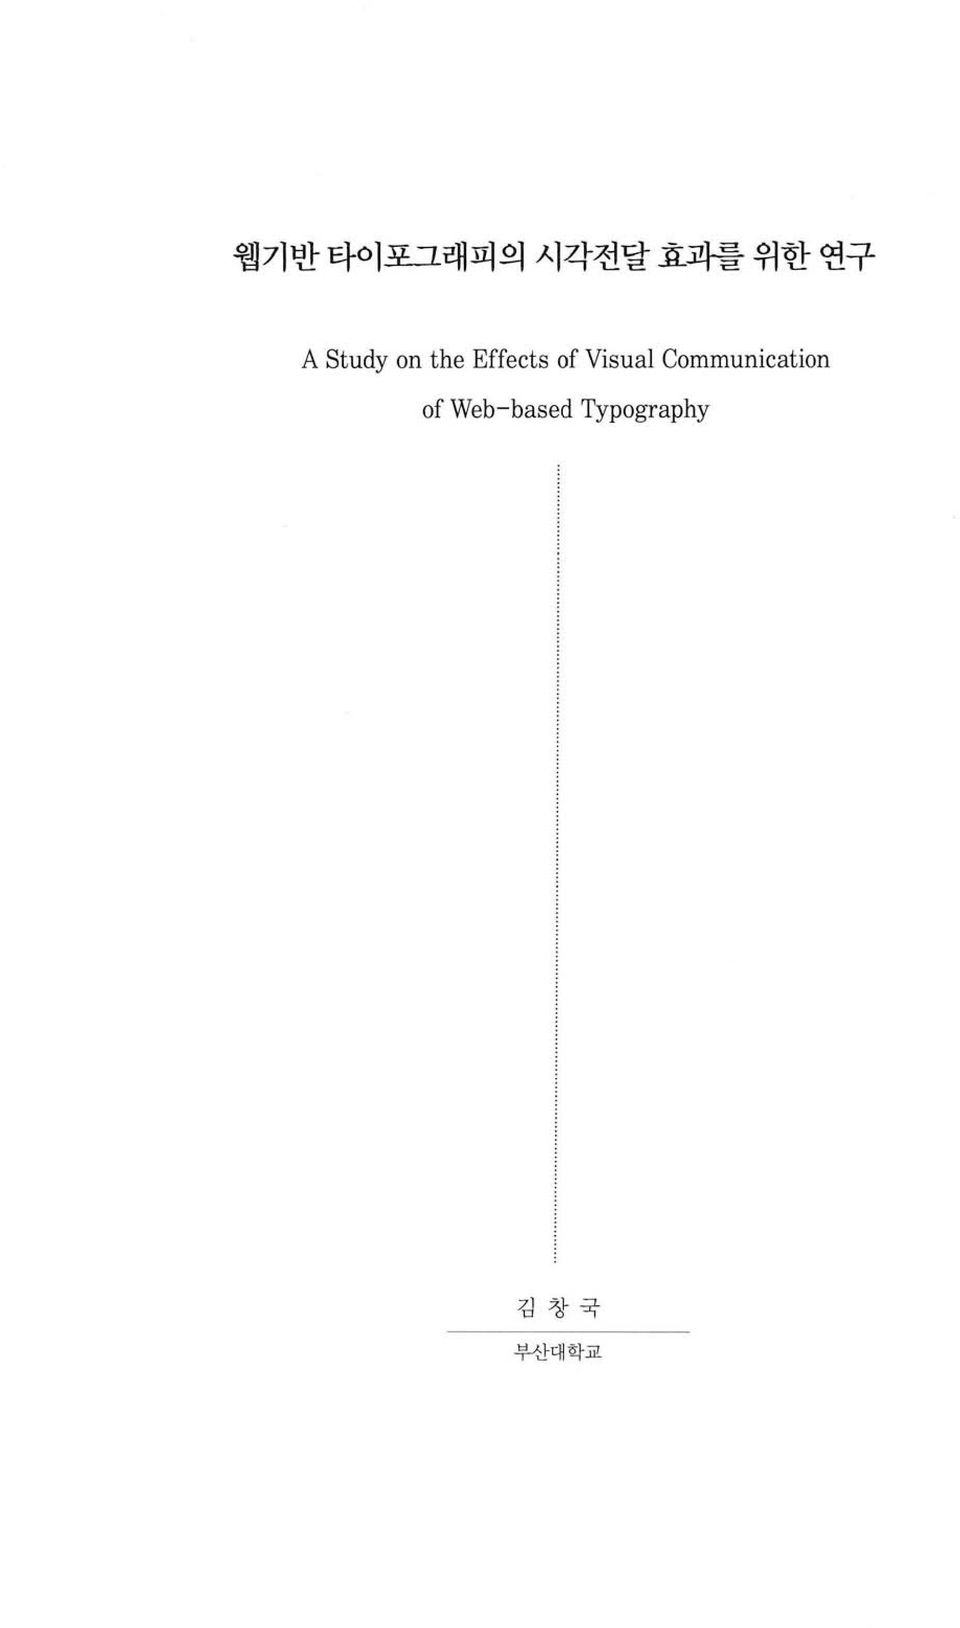 Visual Communication of